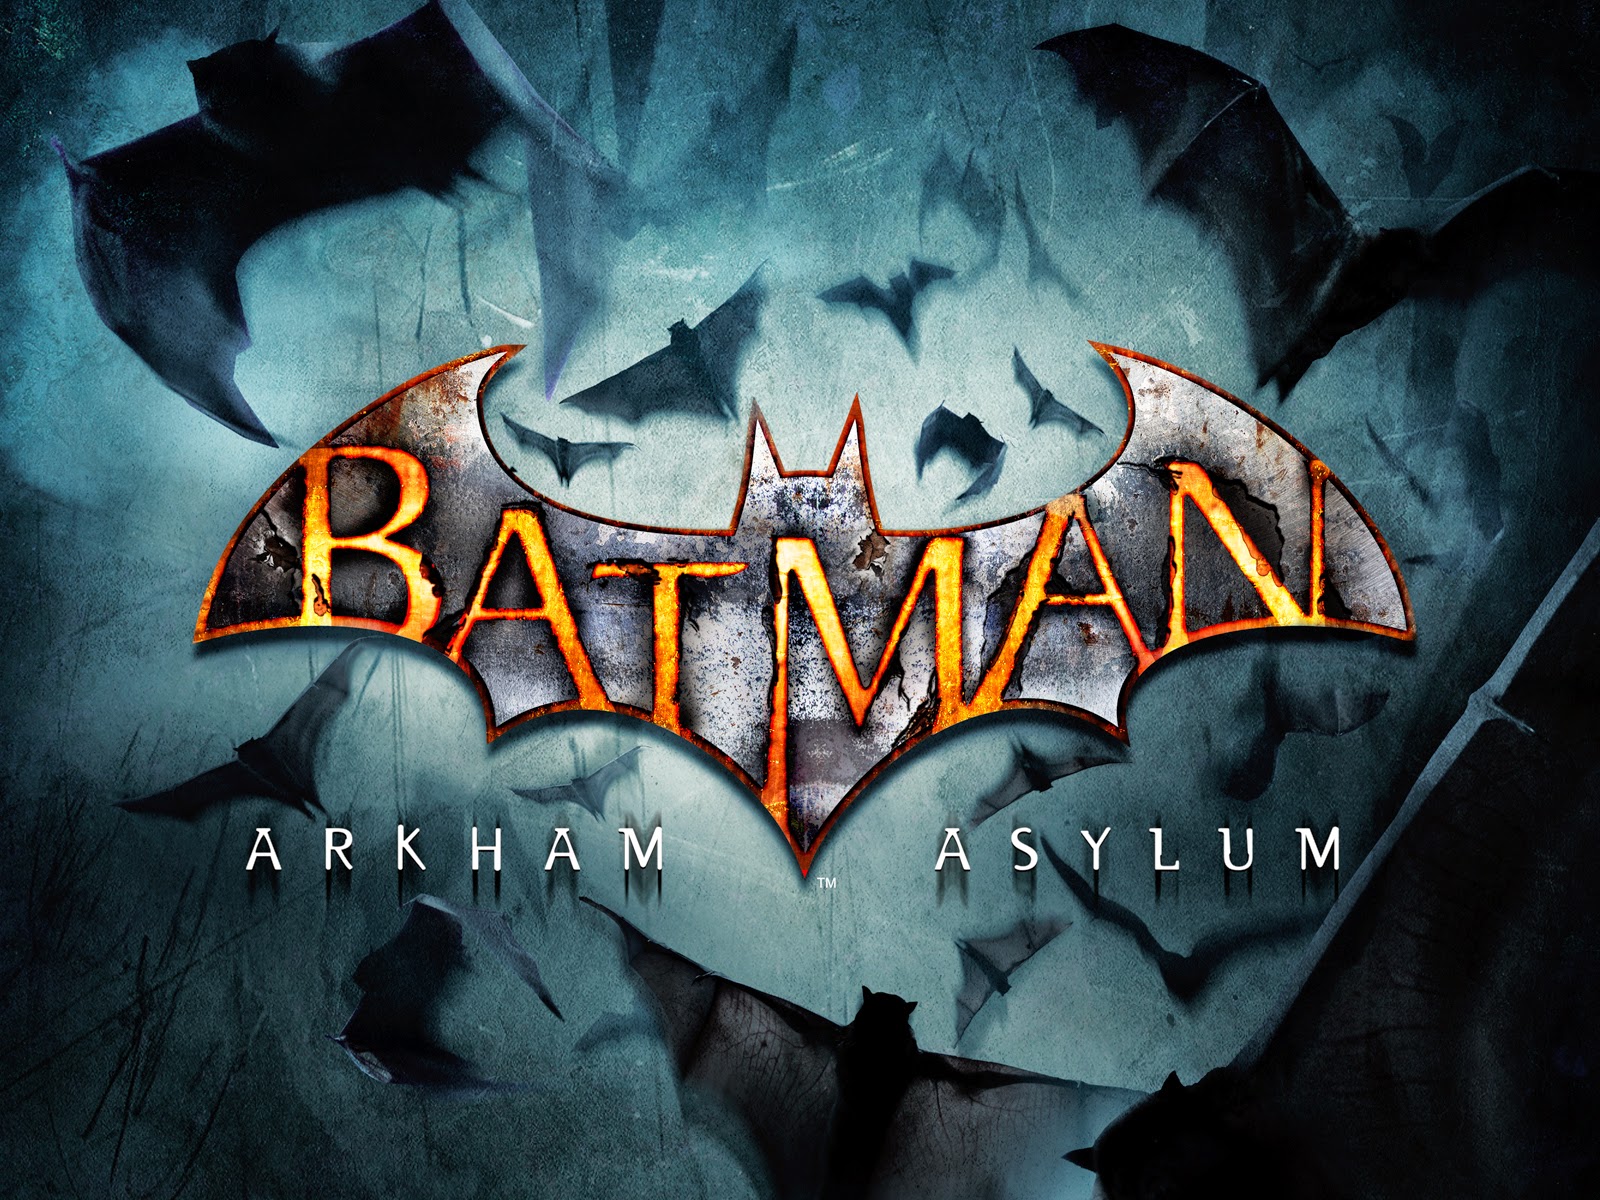 https://blogger.googleusercontent.com/img/b/R29vZ2xl/AVvXsEg136iaZxwPOtgRVudl0O_DeSwqCMRNnmQ8A9Hn5Sz9VpjFfRjFZ9CuYLewWTrcqp3Qd7i0HB02WCtA8XJyvPdwoaEV2XTxMIkwNScgryYVhG49FxDnrJe2Q1CvZd79T7JyrmPEVibPhBS2/s1600/batman-arkham-asylum-logo-wallpaper.jpg